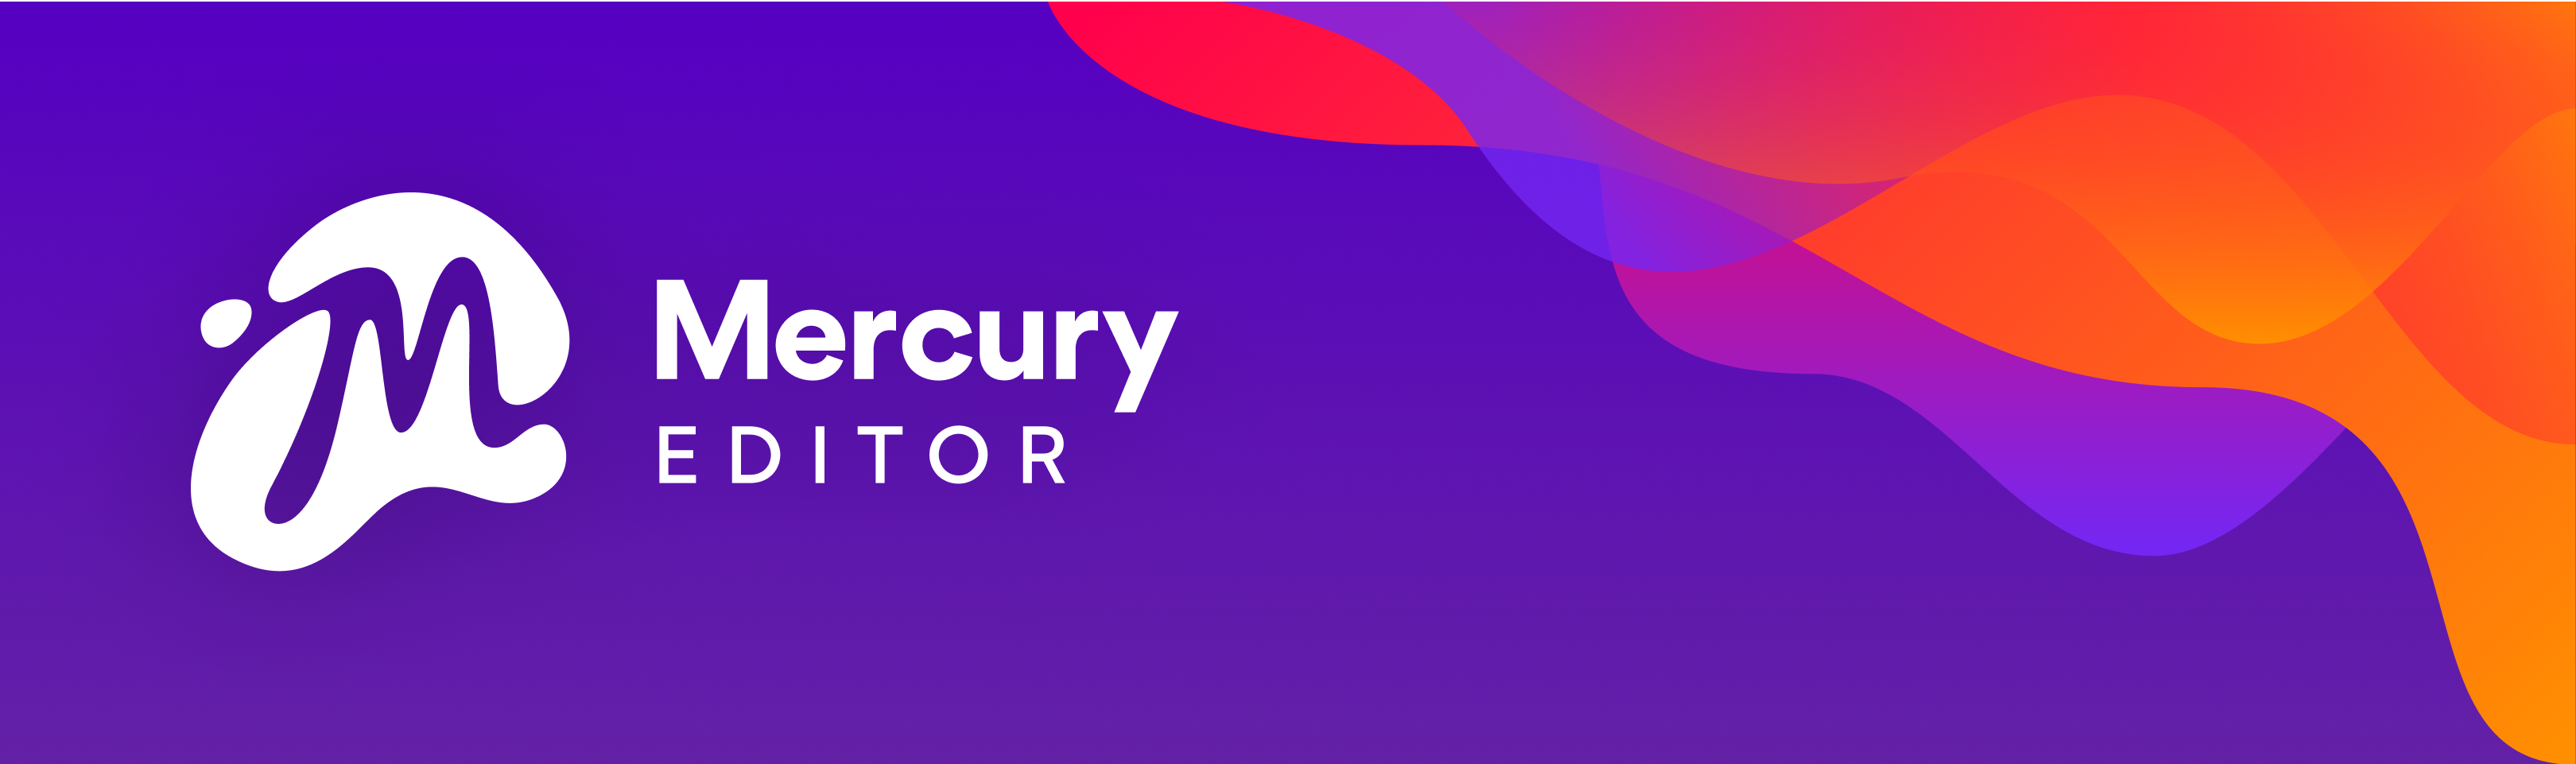 Mercury Editor logo in white on a purple background